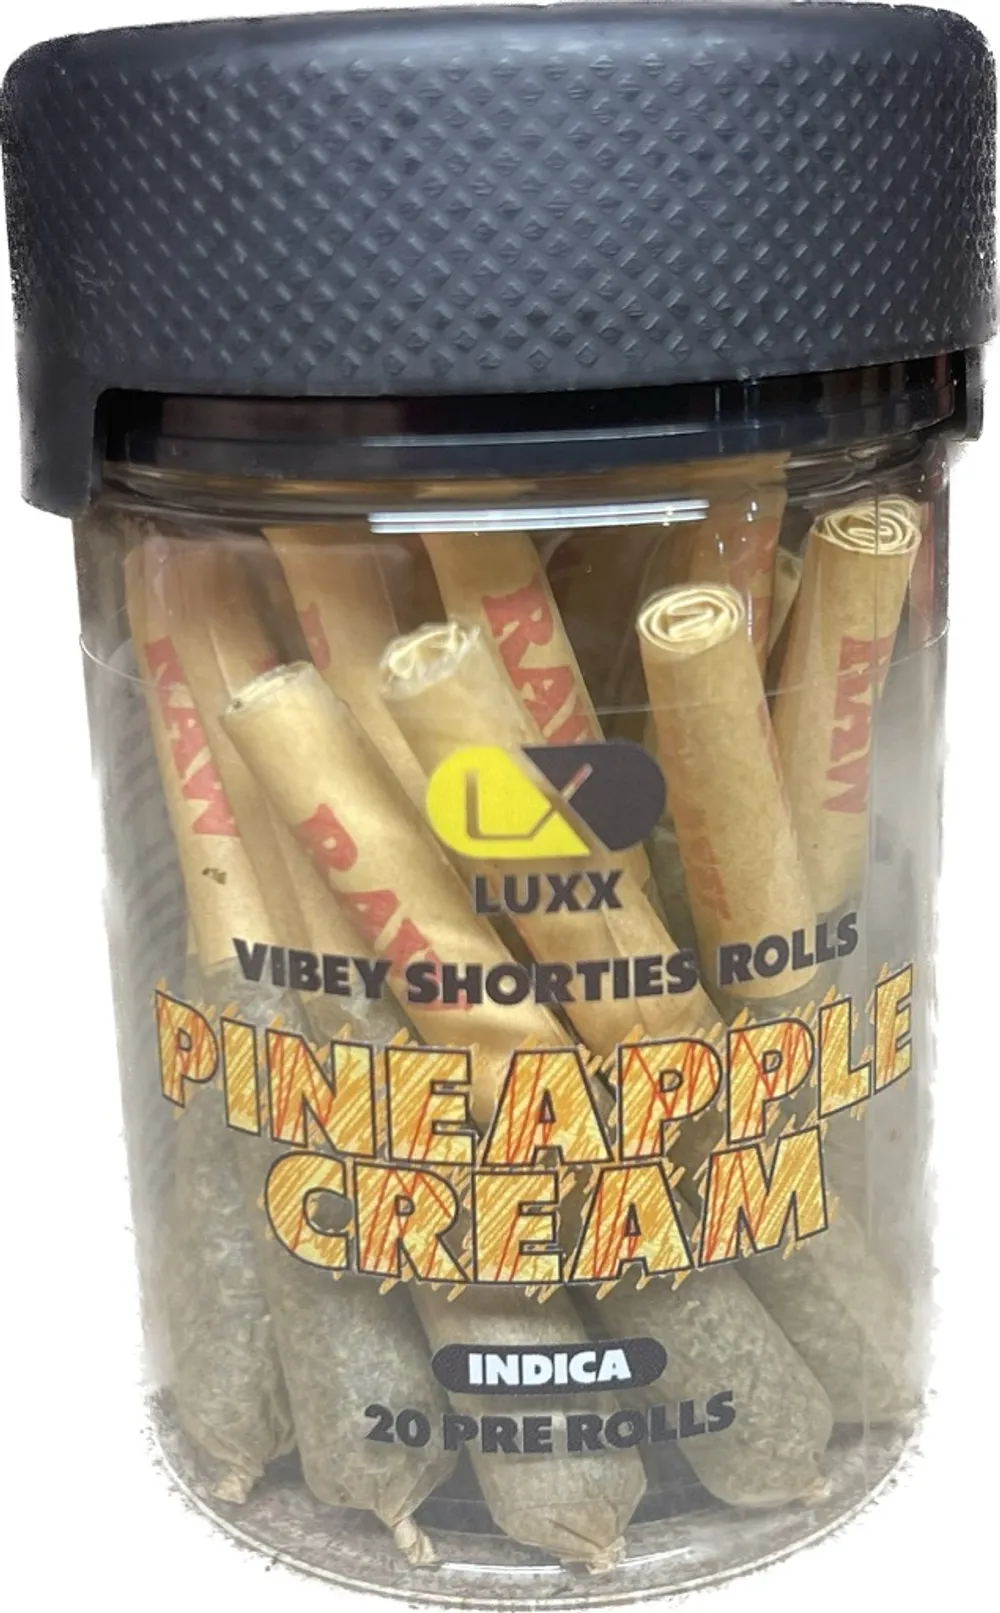 Luxx Vibey Shorties Rolls Pineapple Cream 20ct | Indica: Pineapple Cream